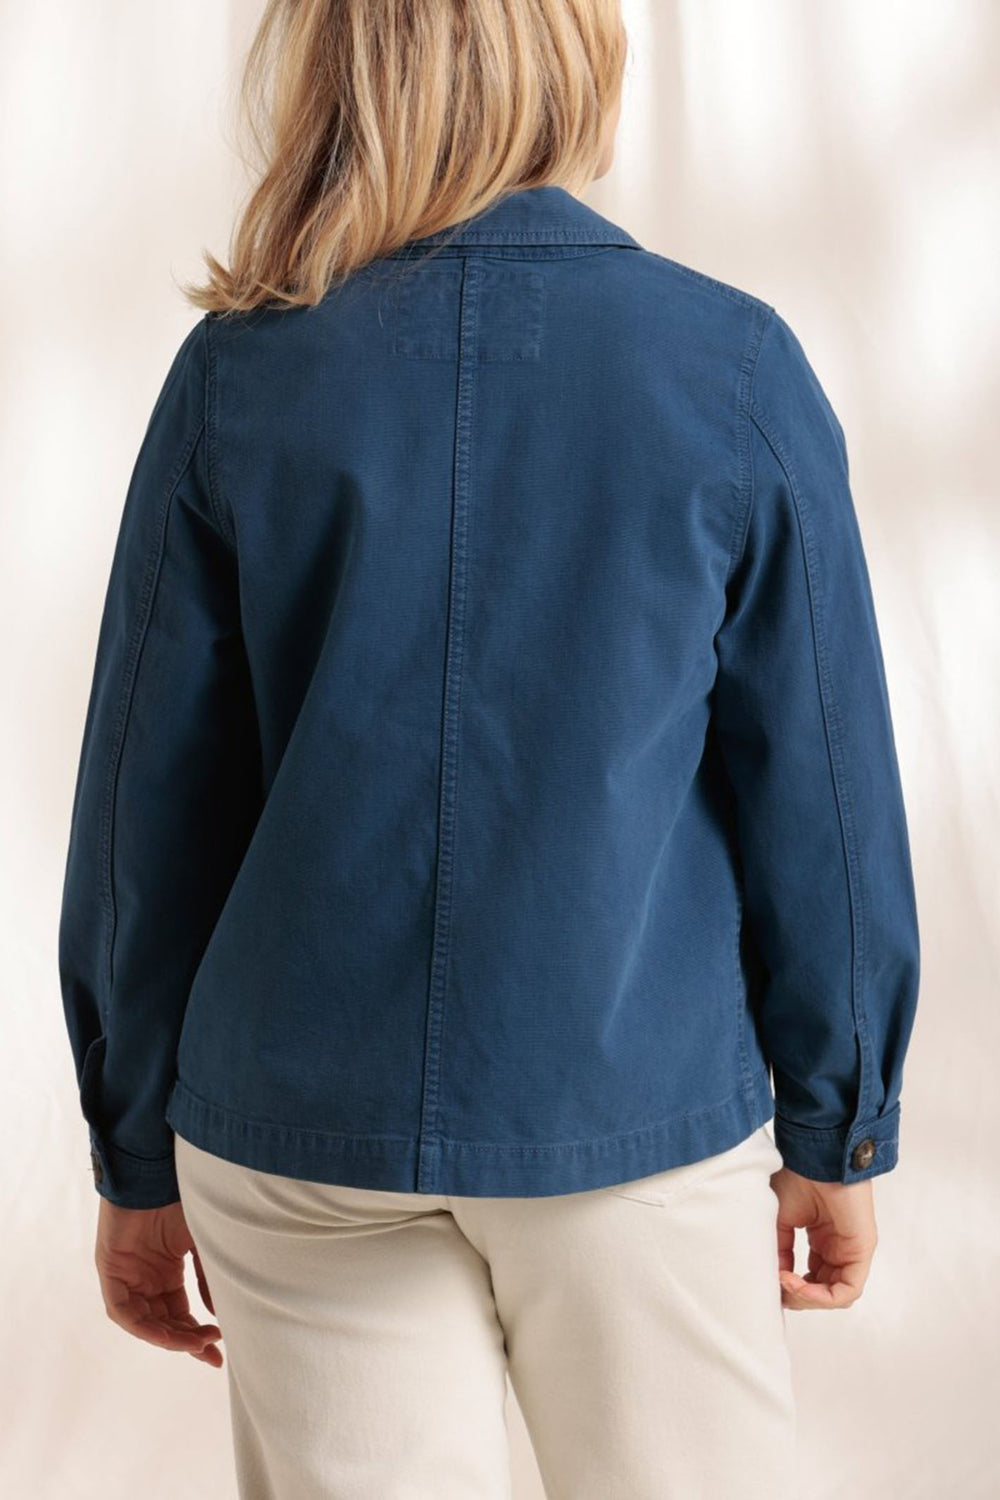 Mat De Misaine Verone-34845 U243 Ink Blue Cotton Shirt Jacket - Shirley Allum Boutique